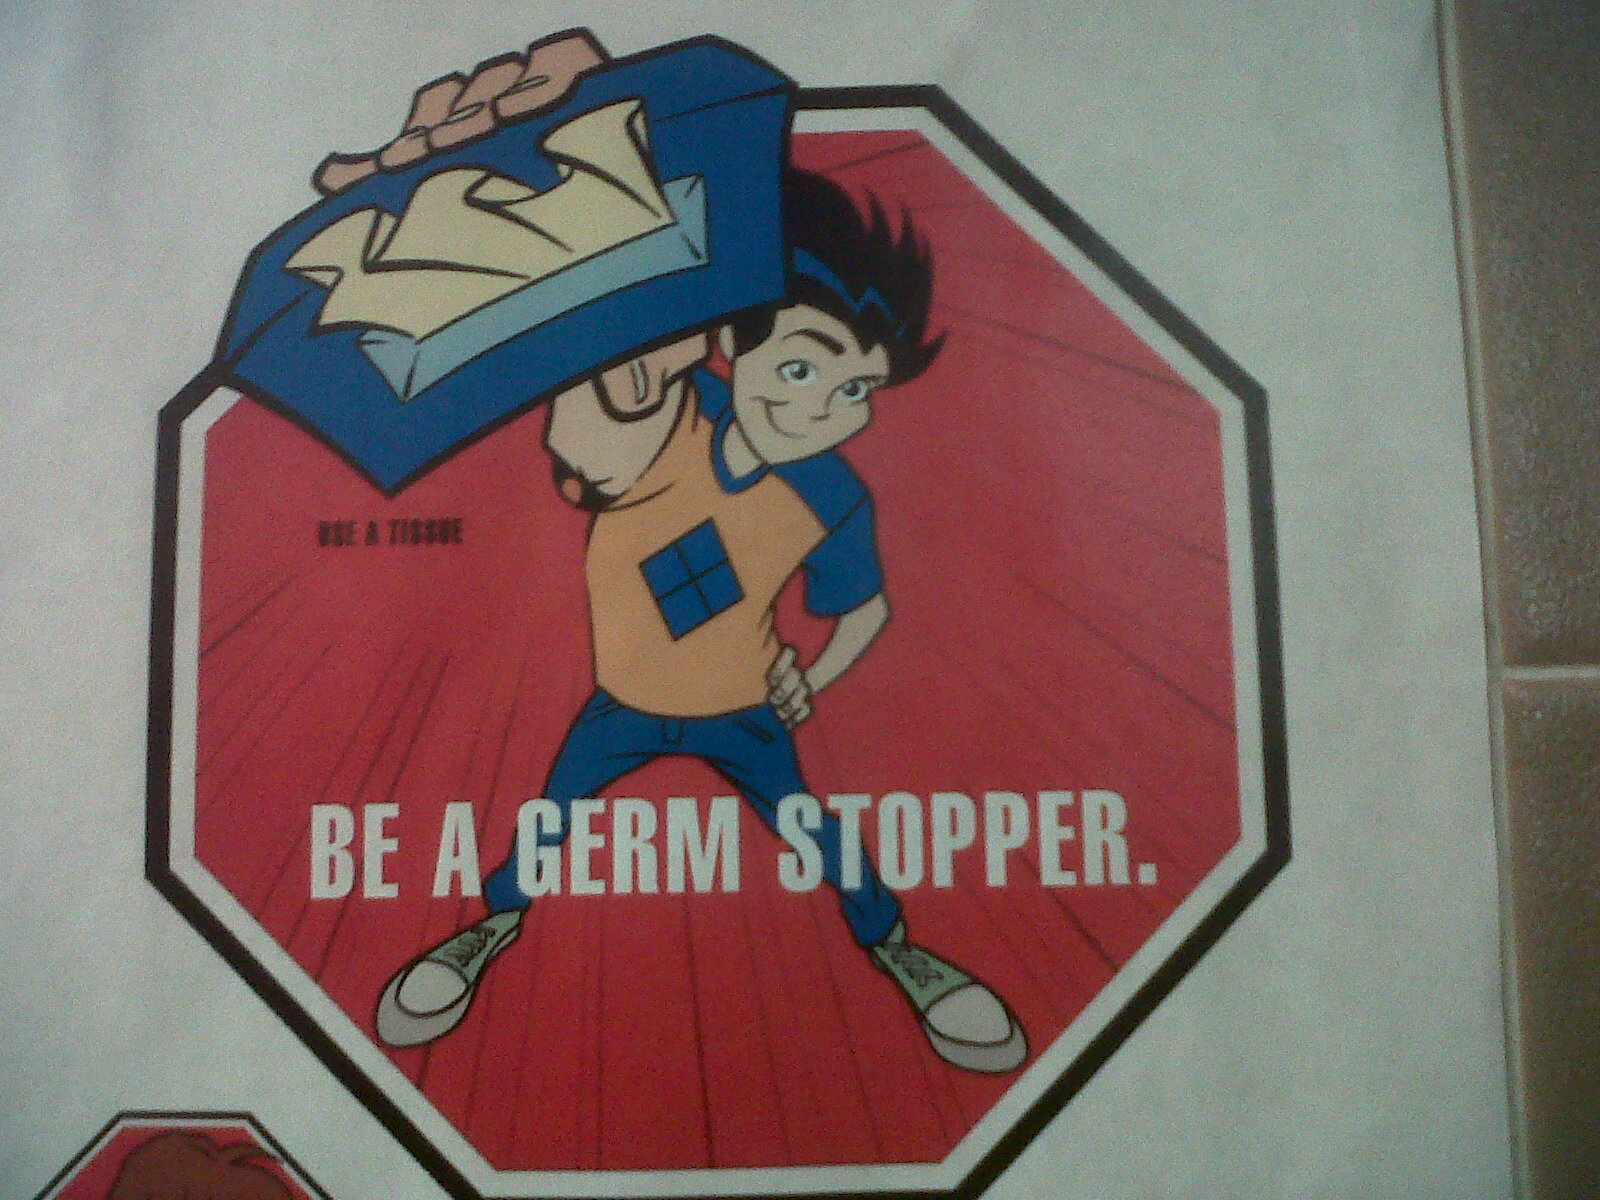 germ stopper - Be A Germ Stopper.